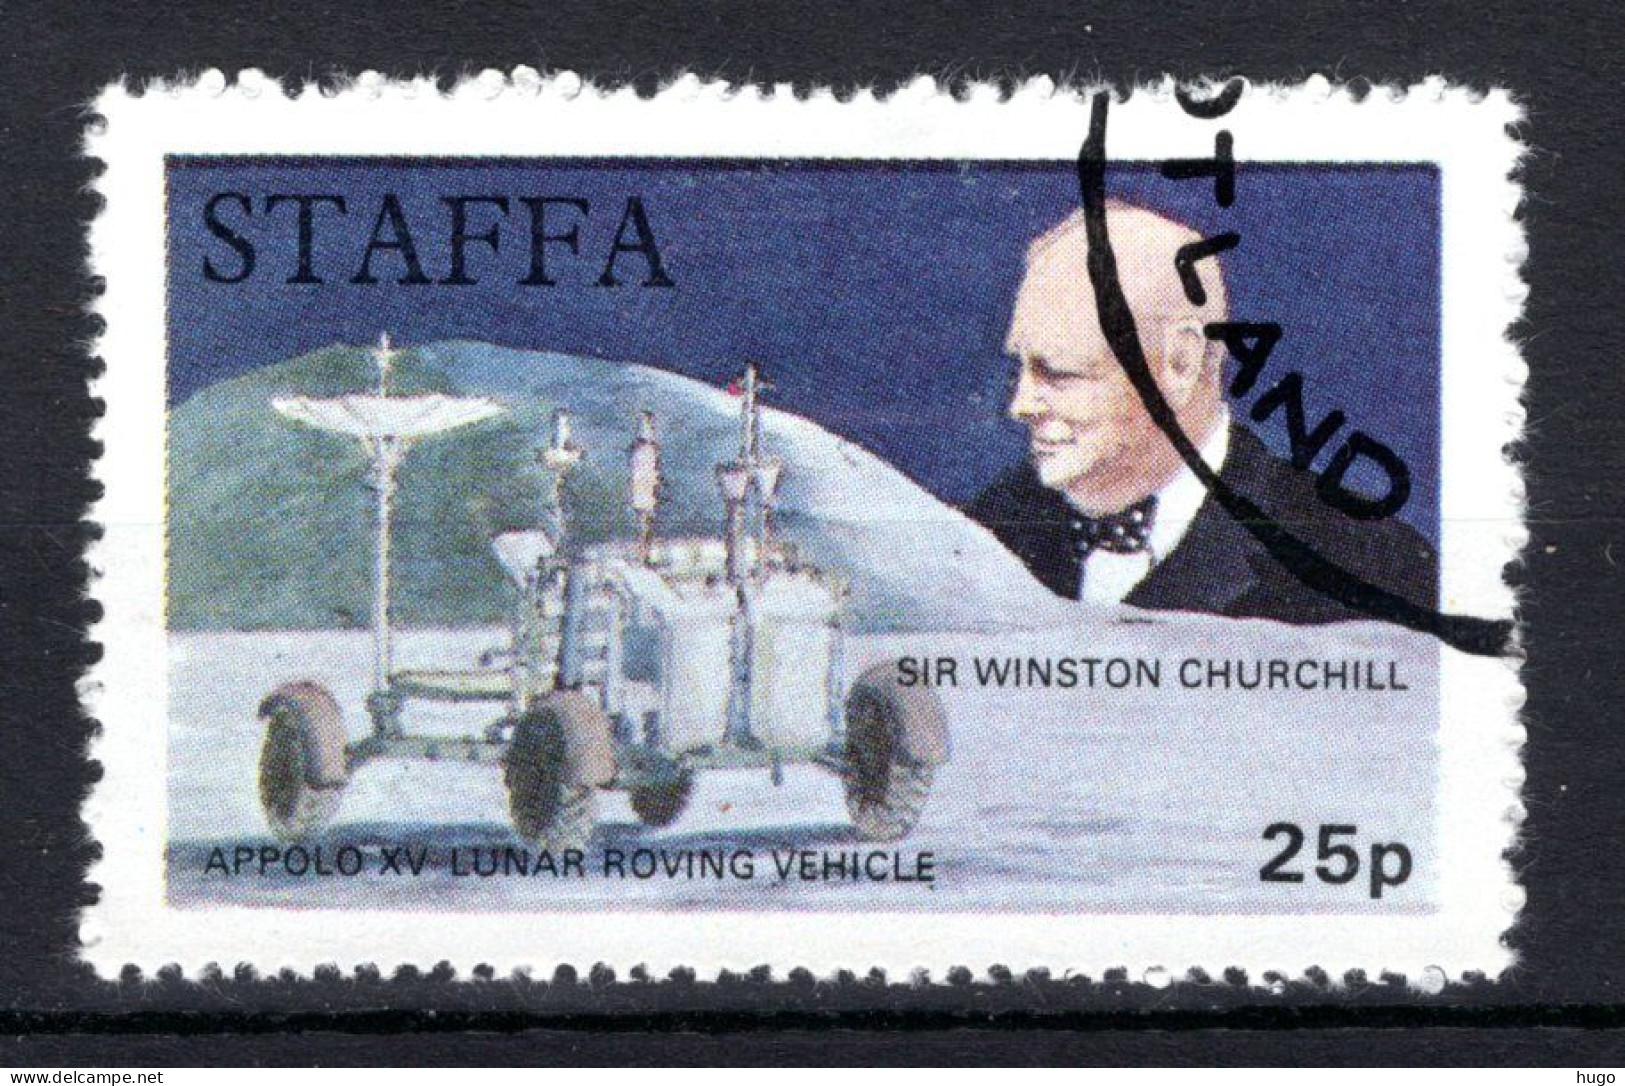 STAFFA -  Appolo XV Lunar Module, Sir Winston Churchill 1972 - Local Issues